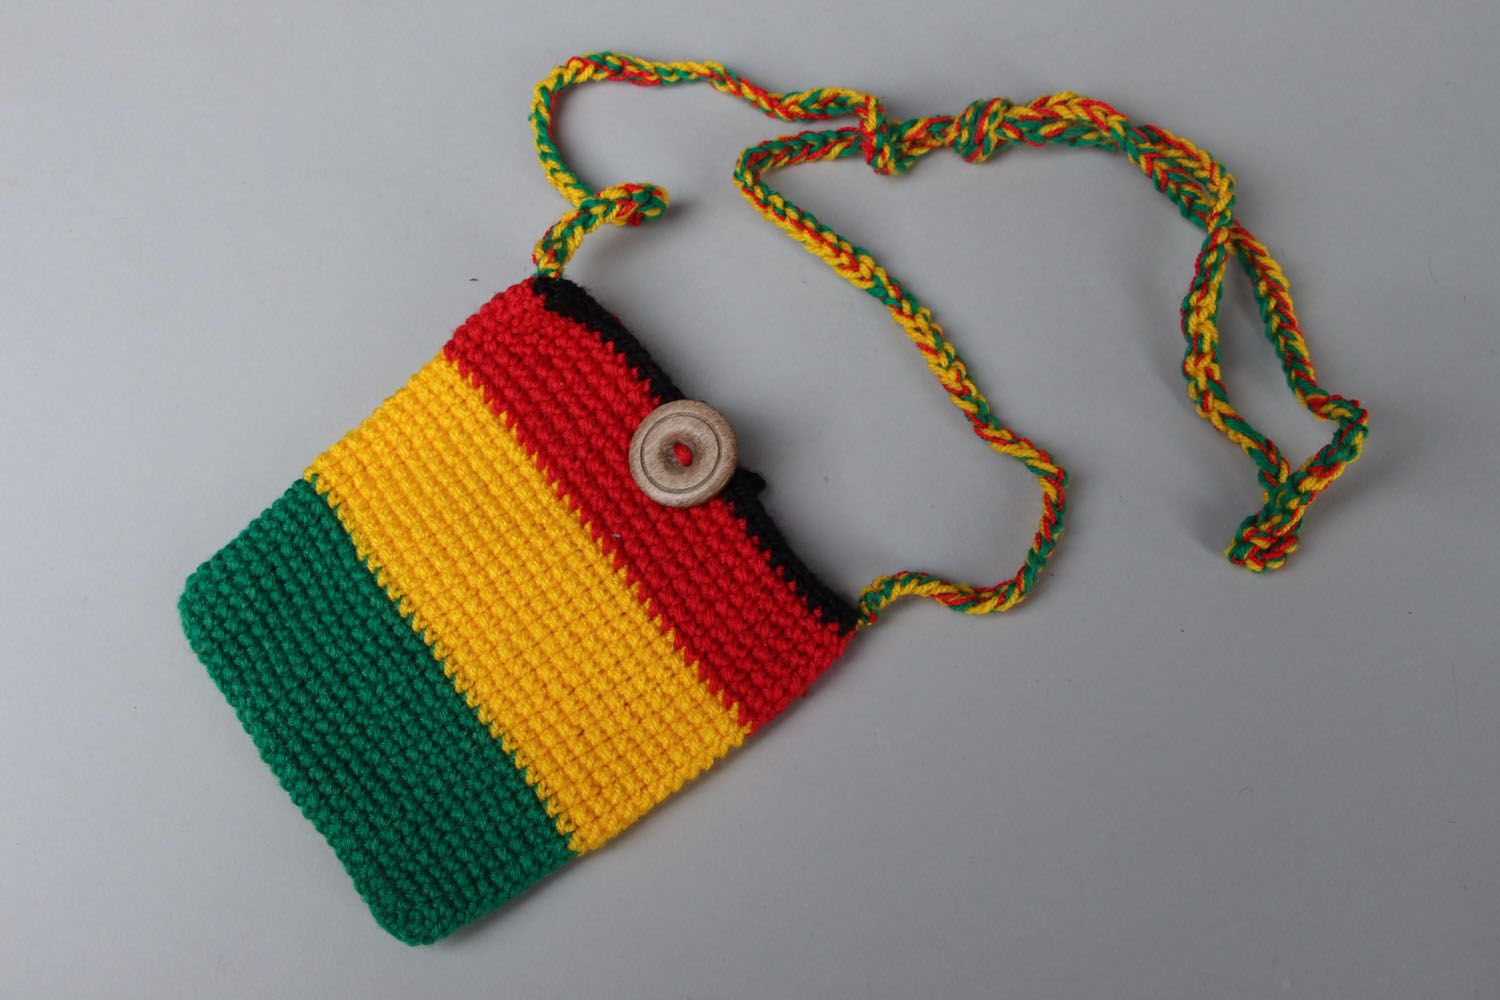 Crochet purse in rasta style photo 1